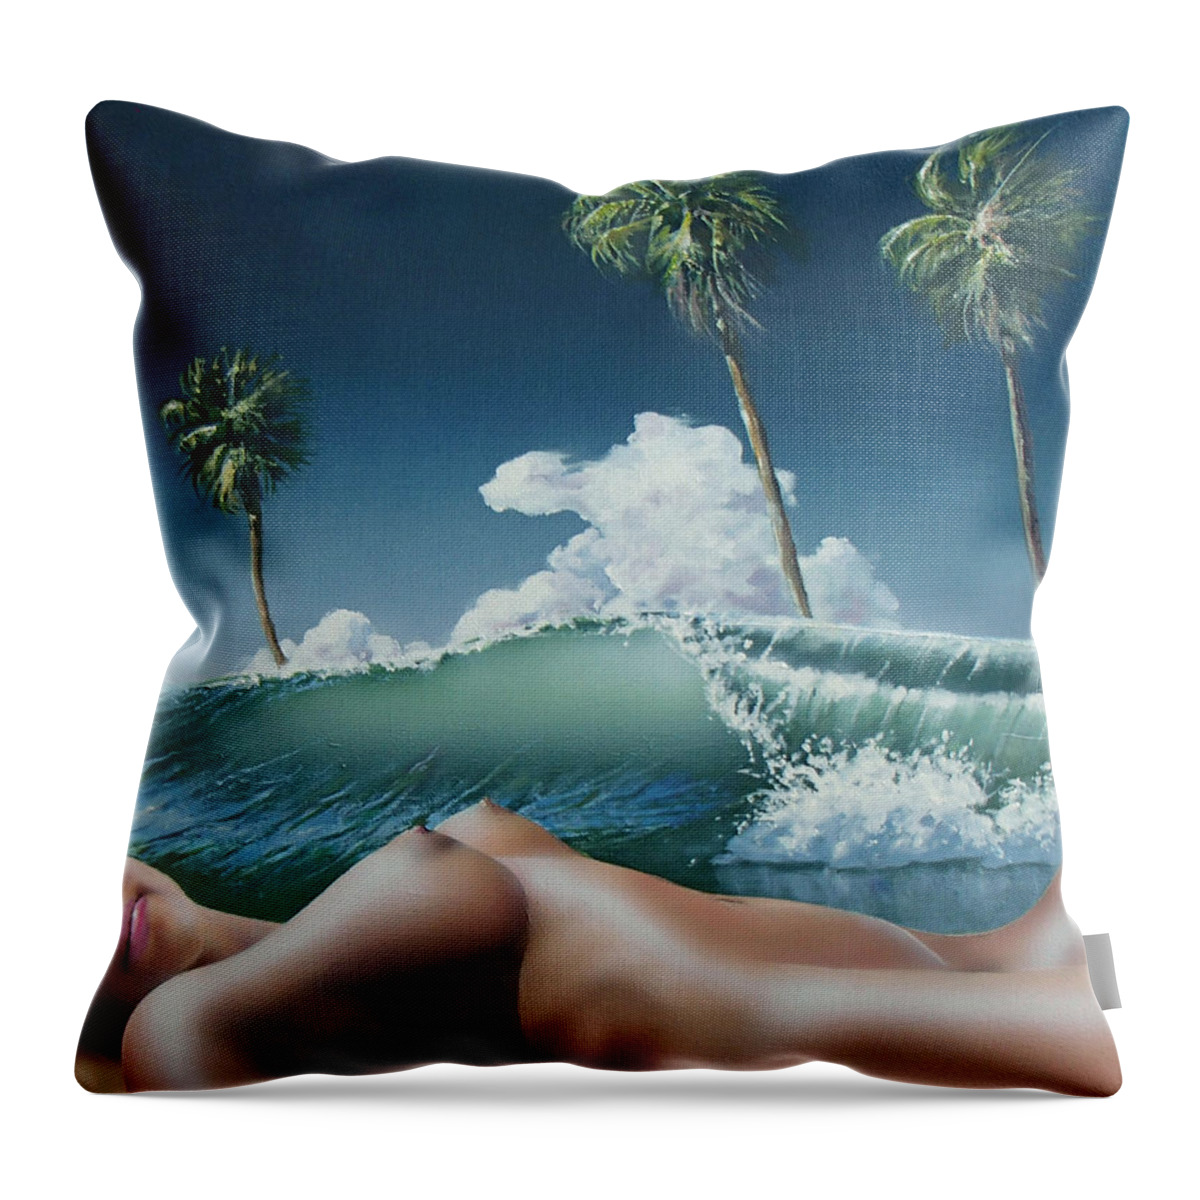 Ocean Throw Pillow featuring the painting Summer by Philip Fleischer